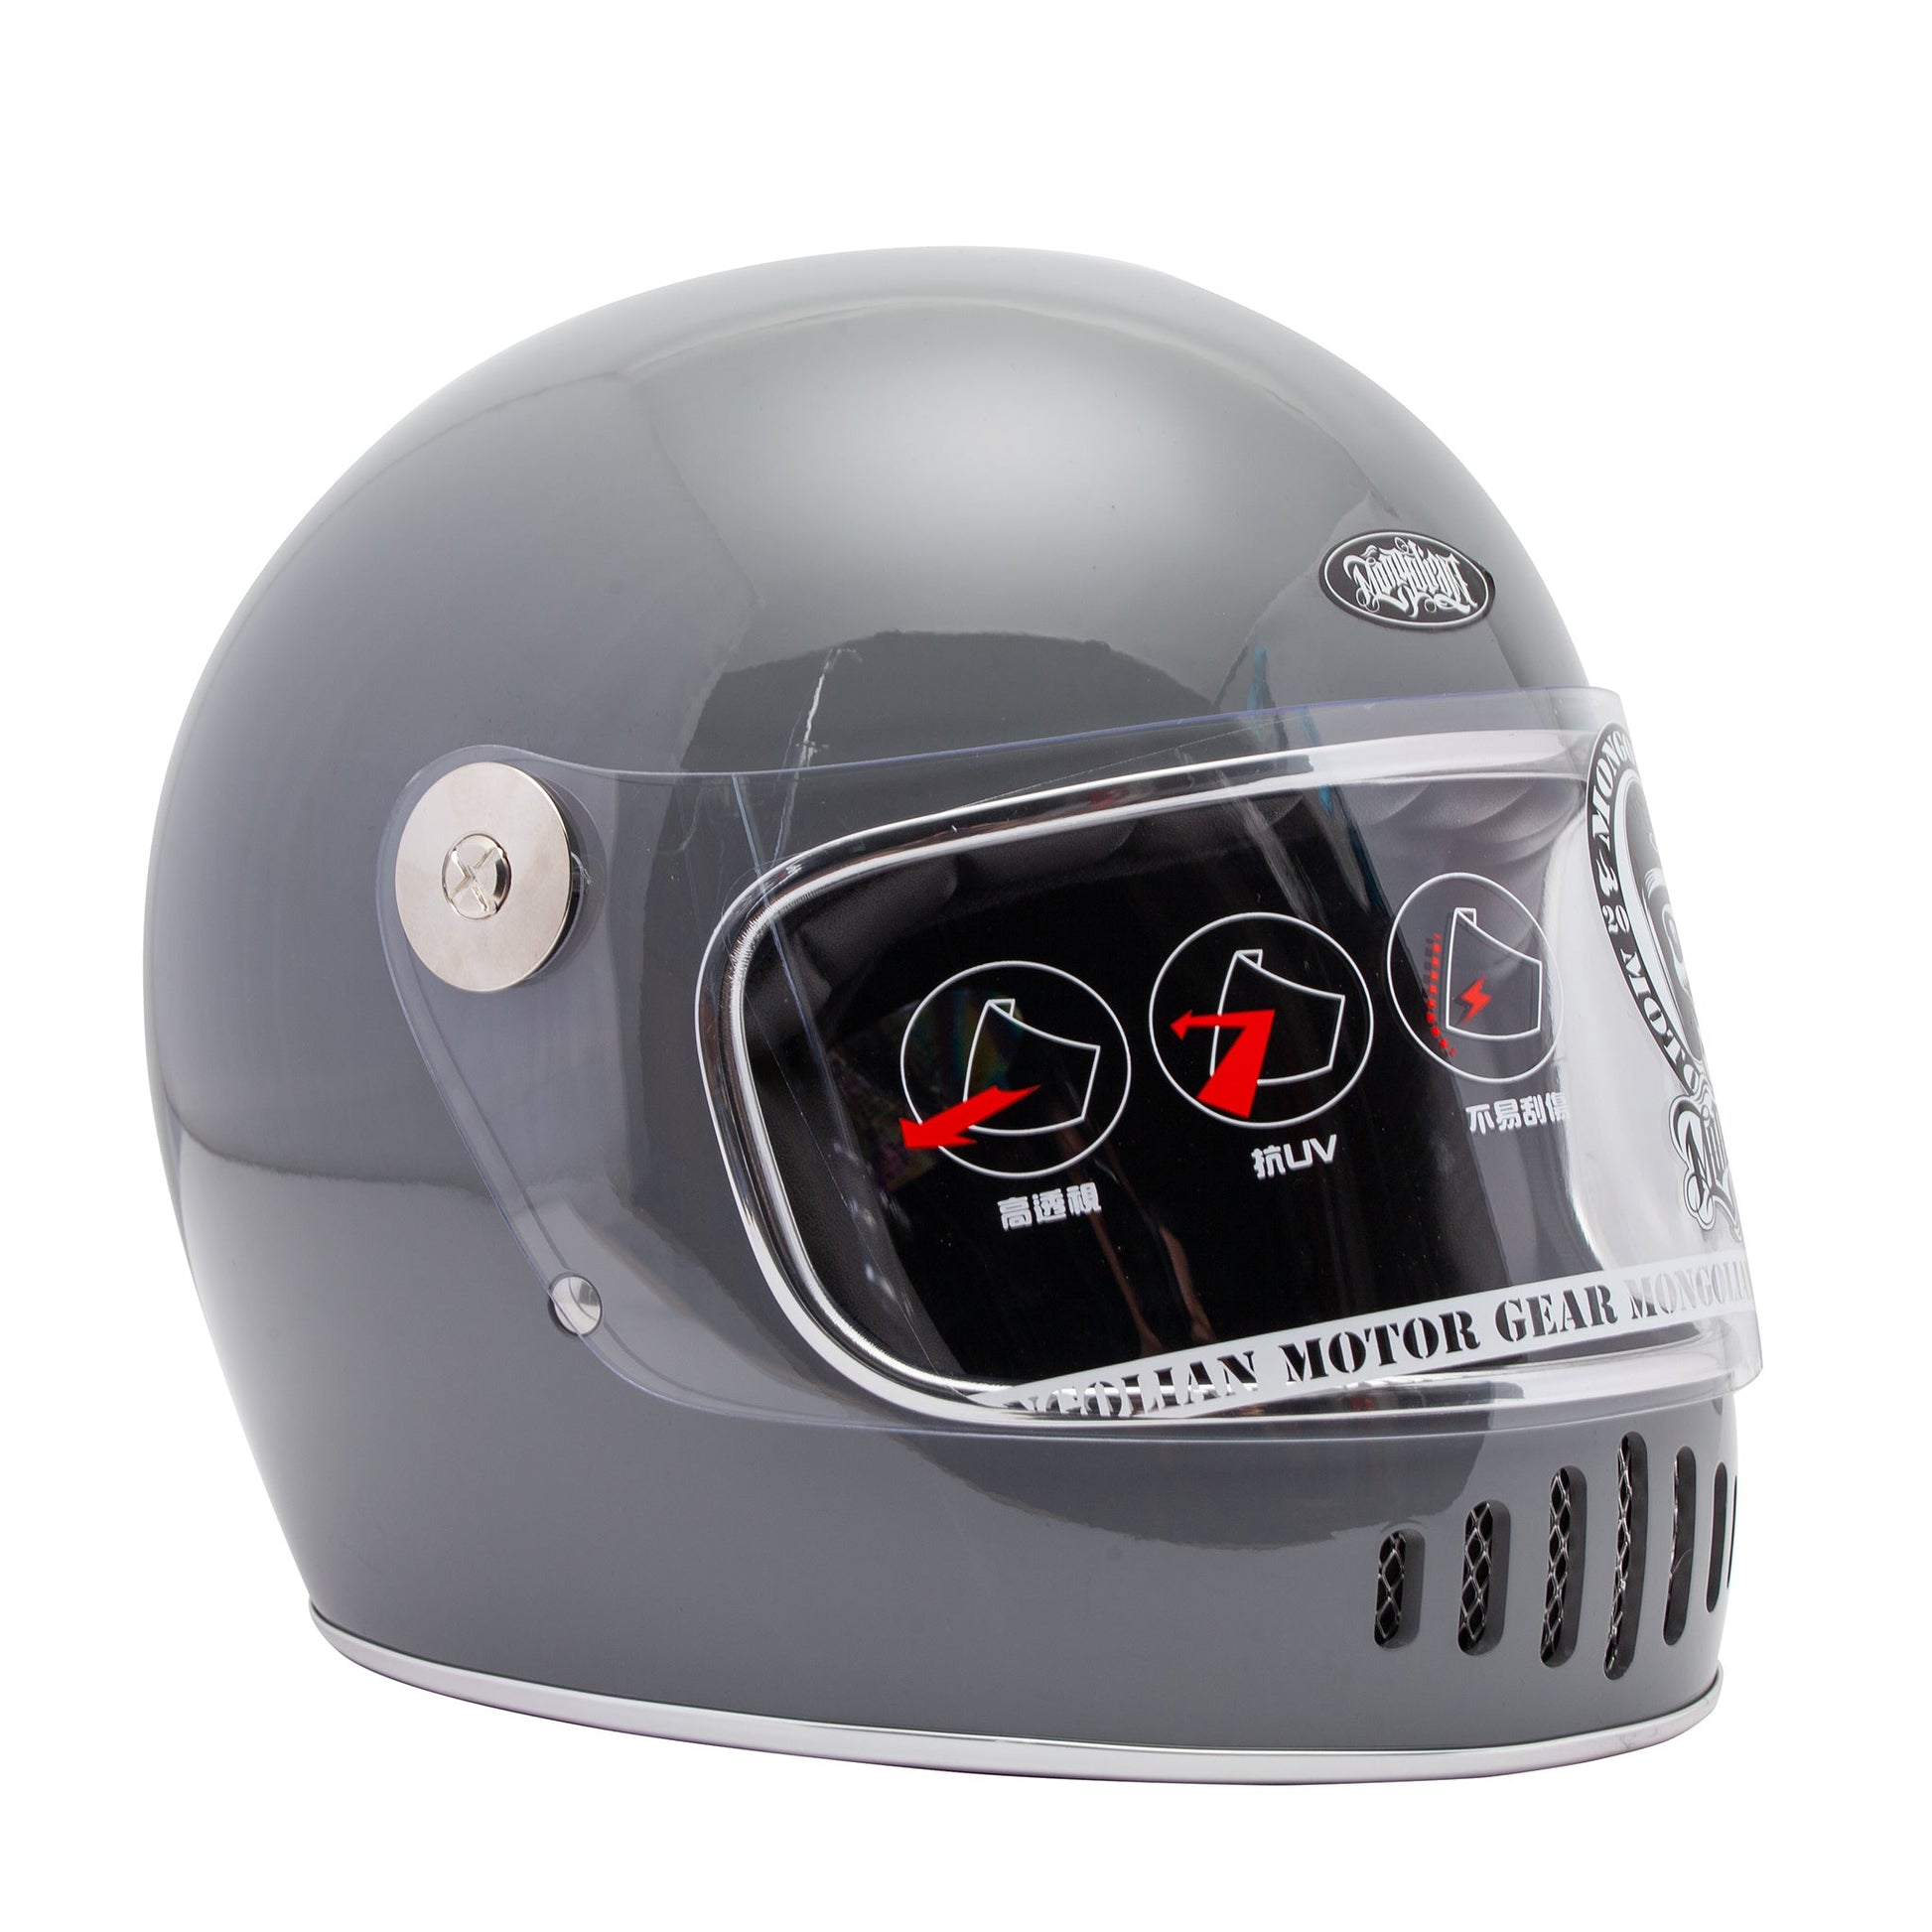 COMET PLANET Helmet - Gloss Basalt Grey - Fogy Garage